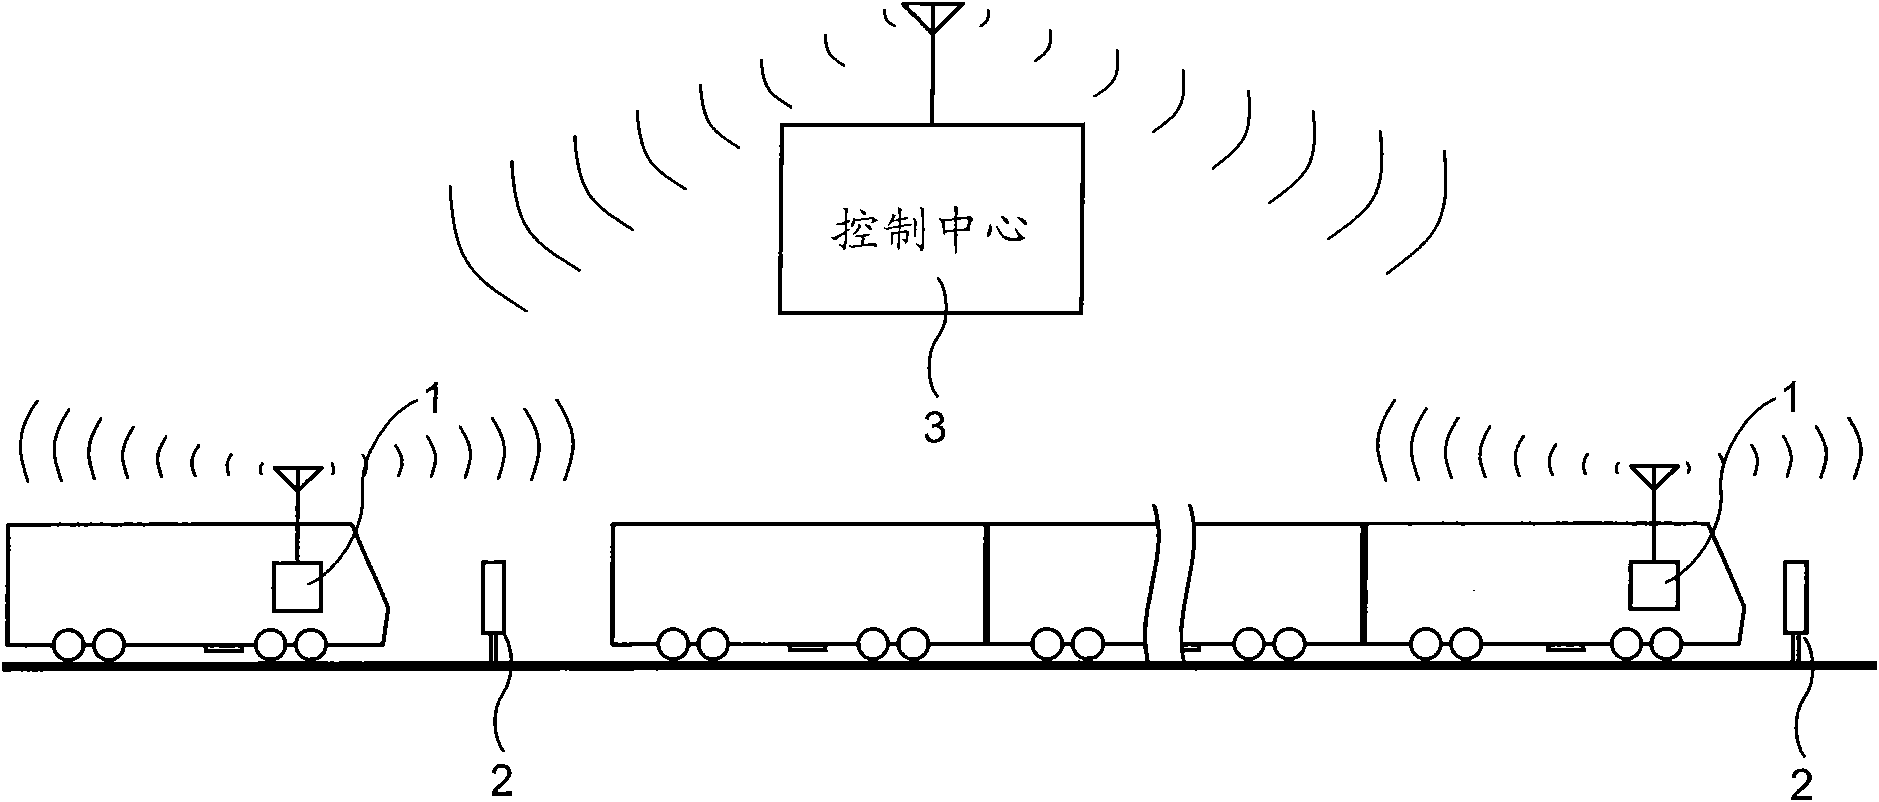 Railway signal system adopting centerless communication mode